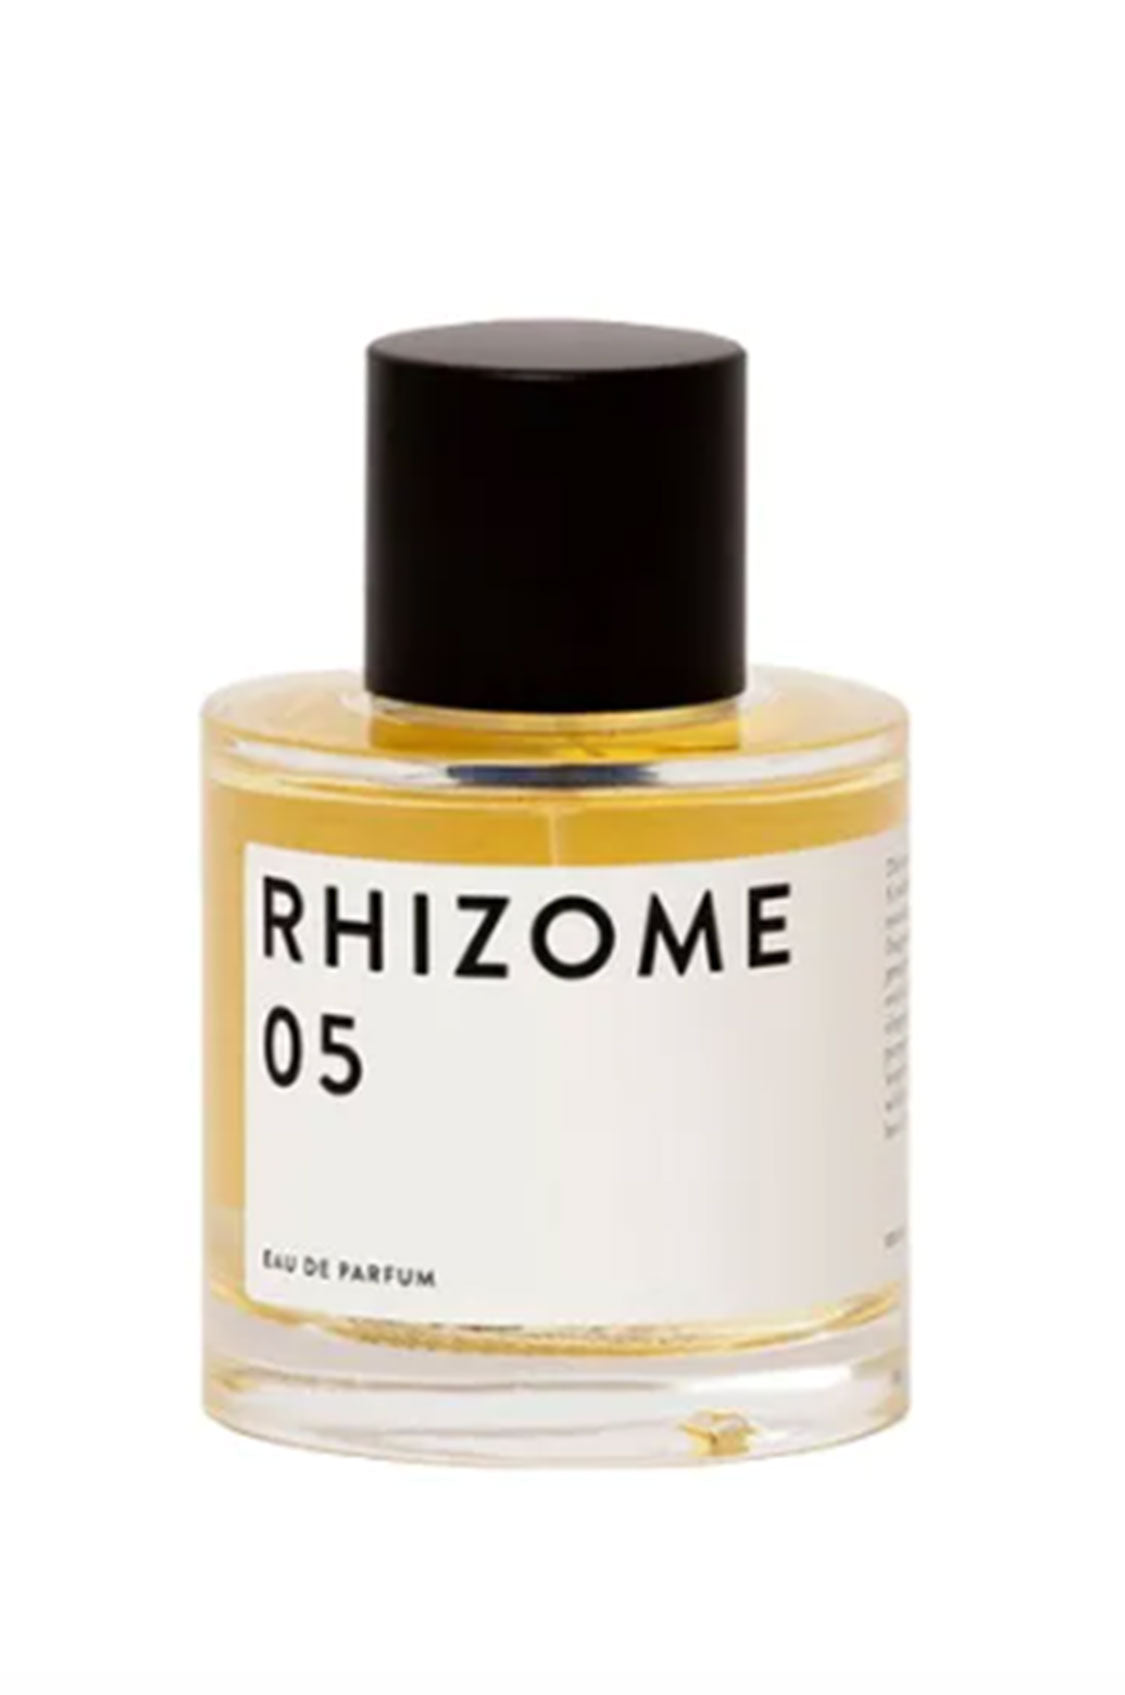 Rhizome 05